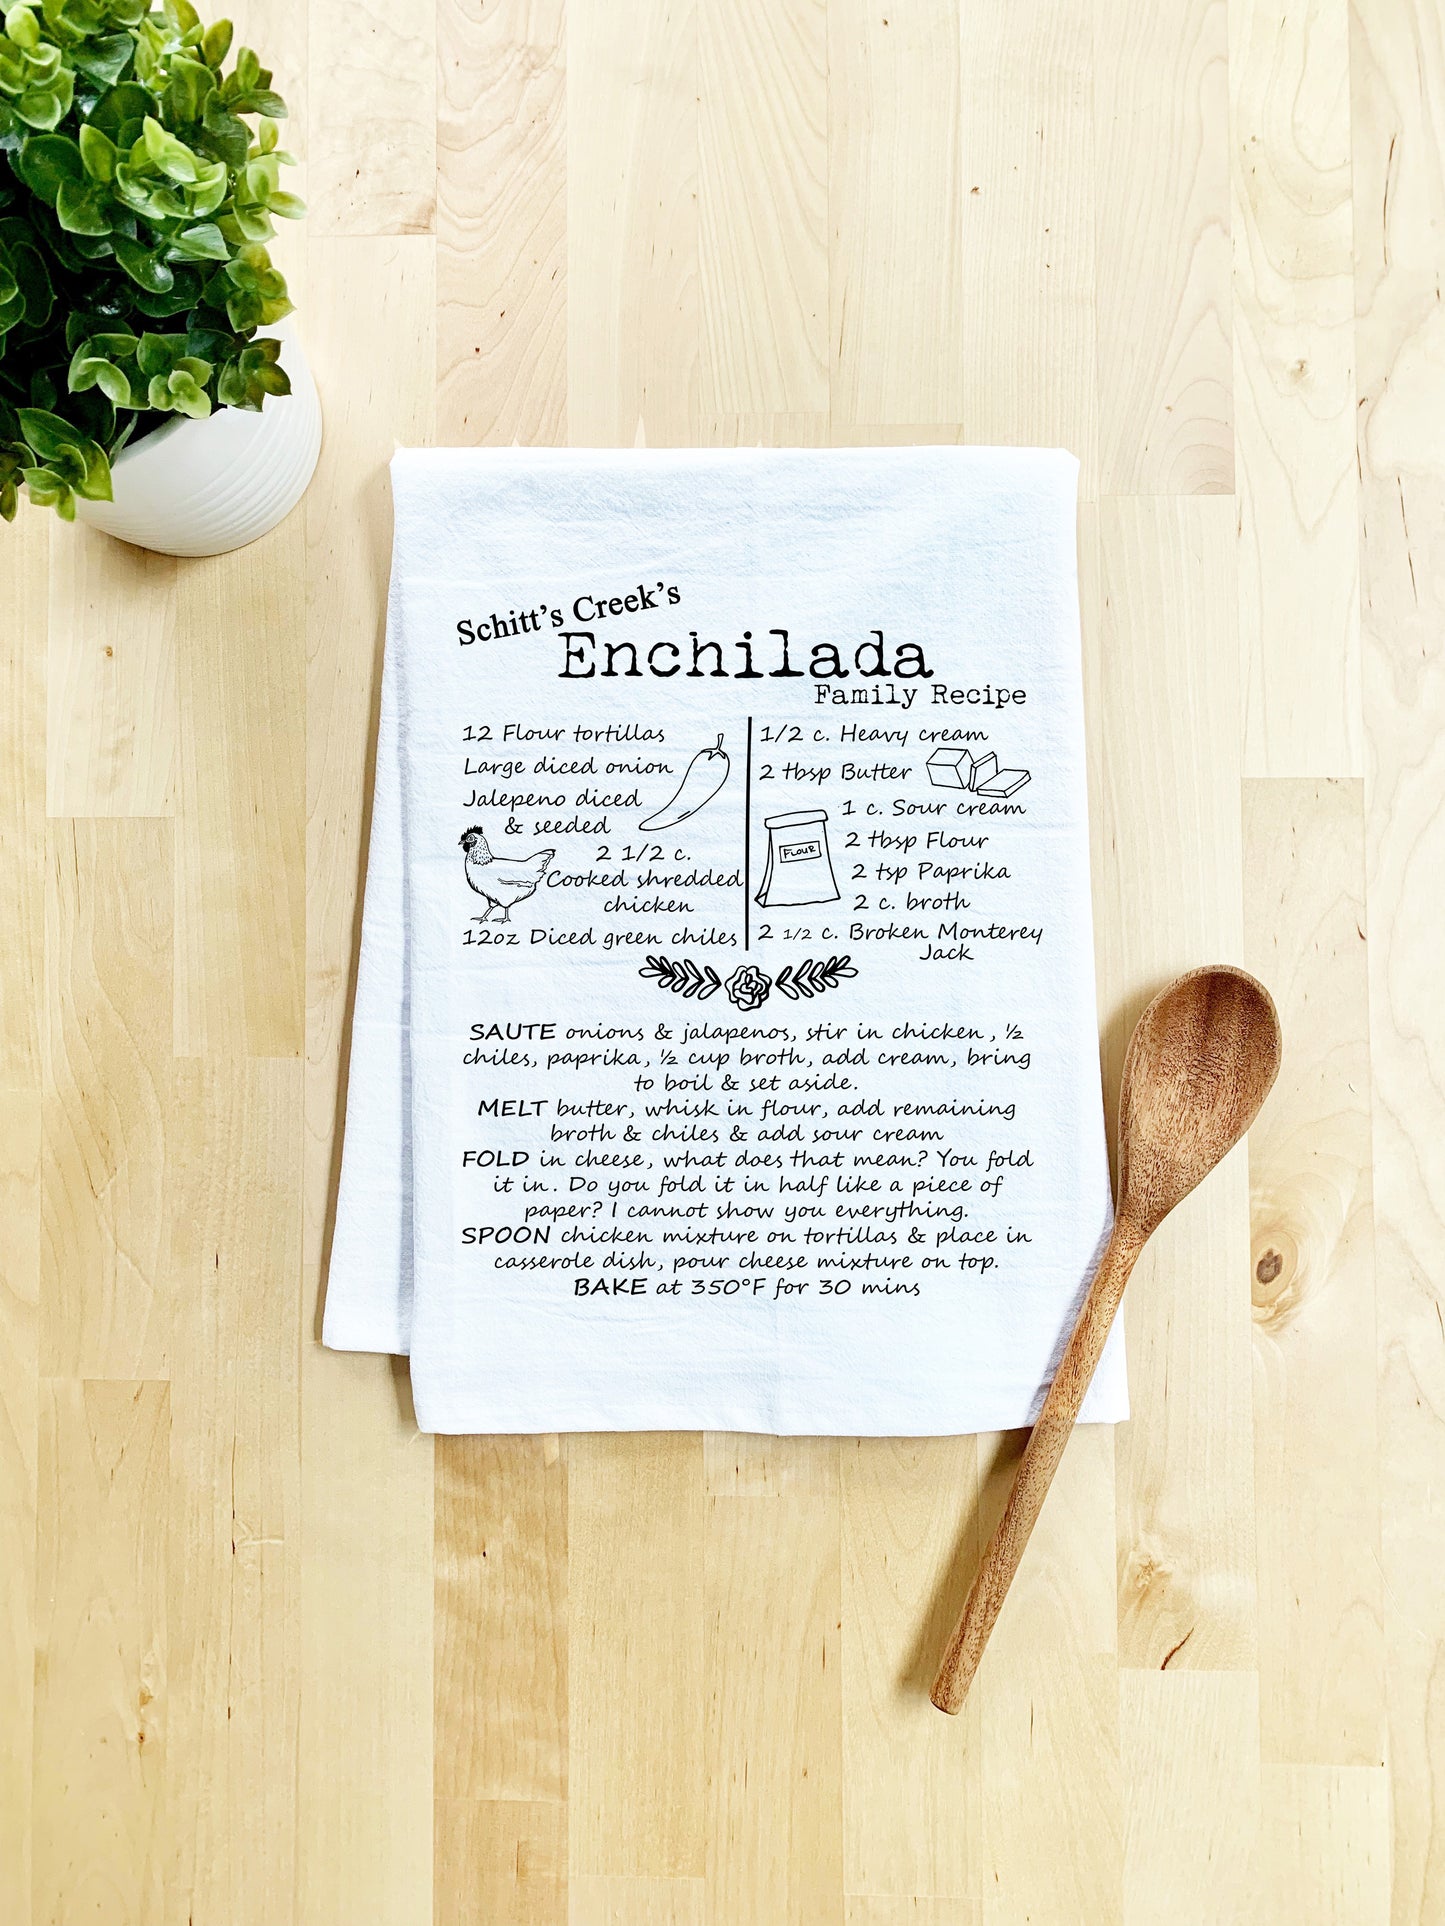 Schitt's Creek Family Enchilada Recipe Dish Towel - White Or Gray